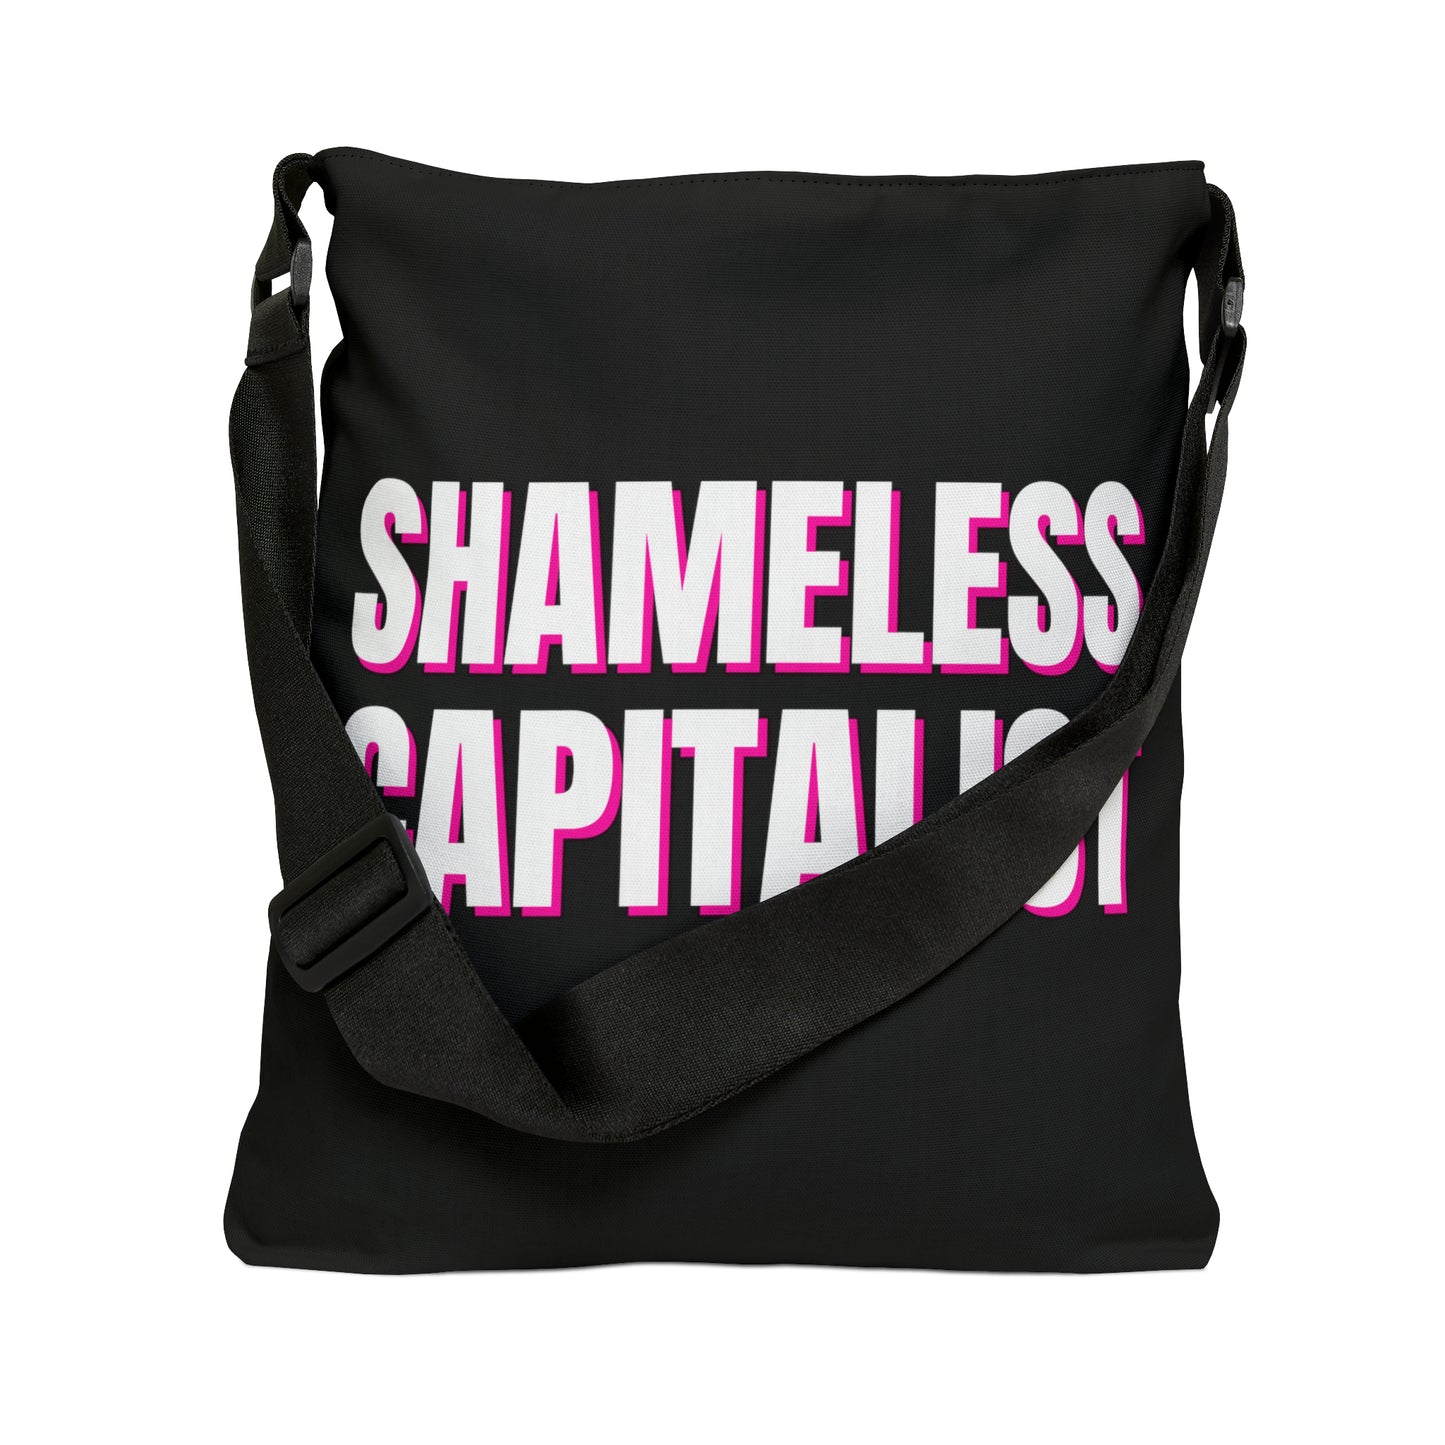 Shameless Capitalist Adjustable Tote Bag